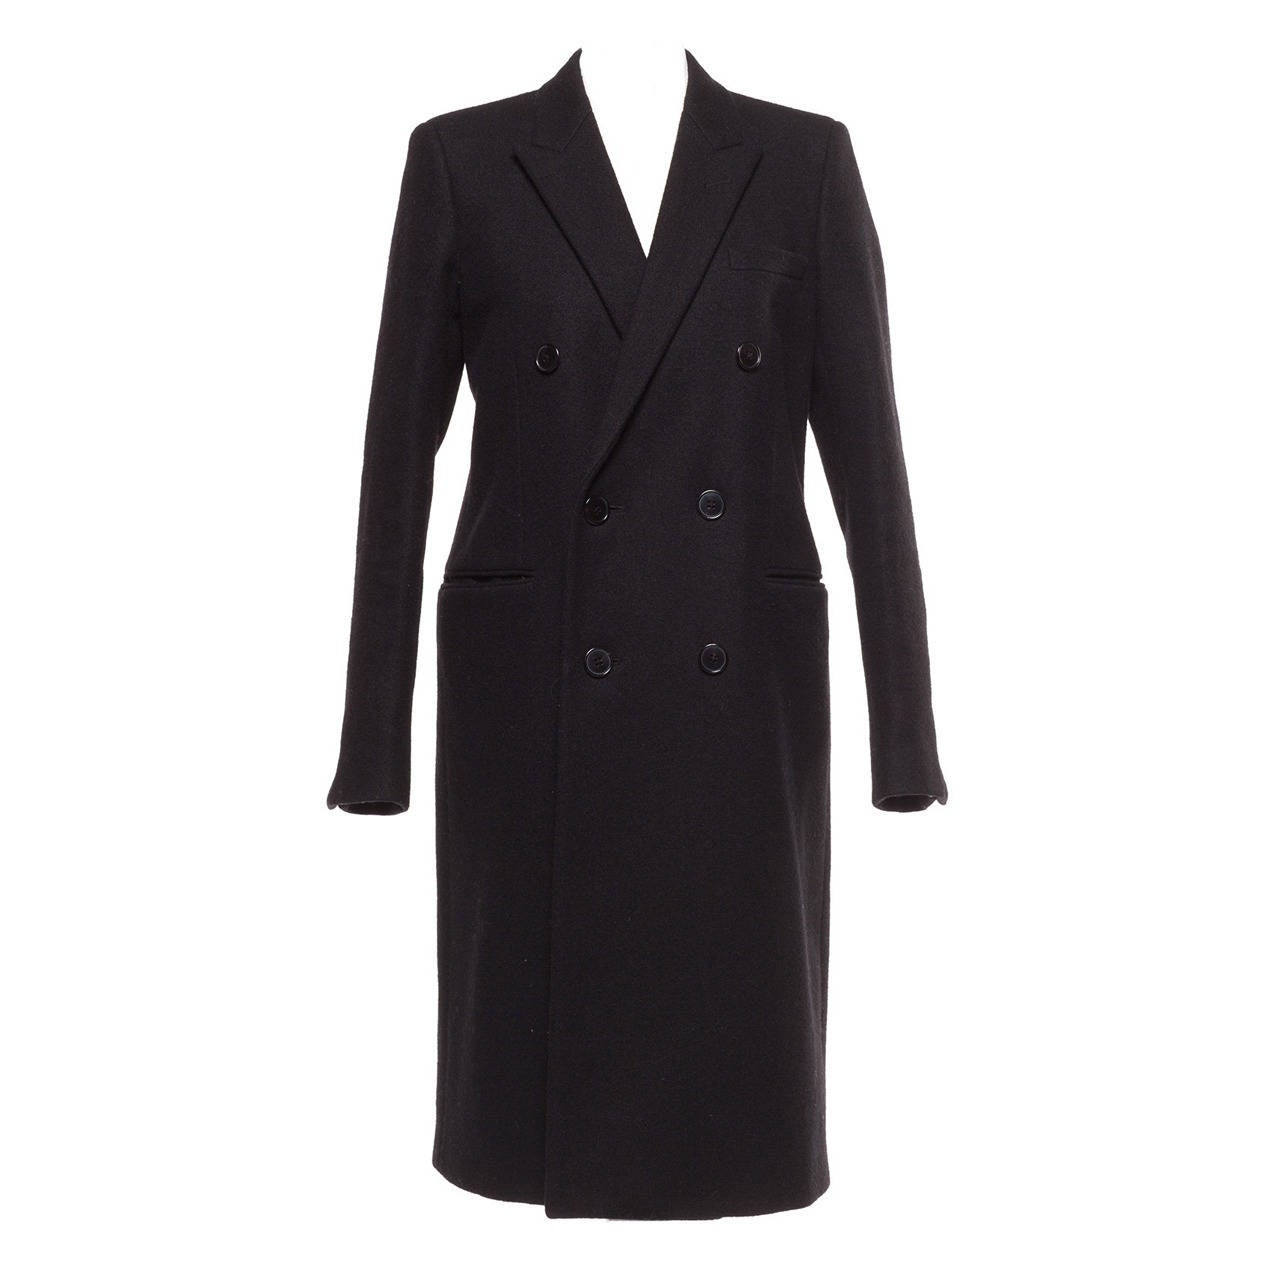 Saint Laurent by Hedi Slimane Wool tuxedo coat, Sz. XS